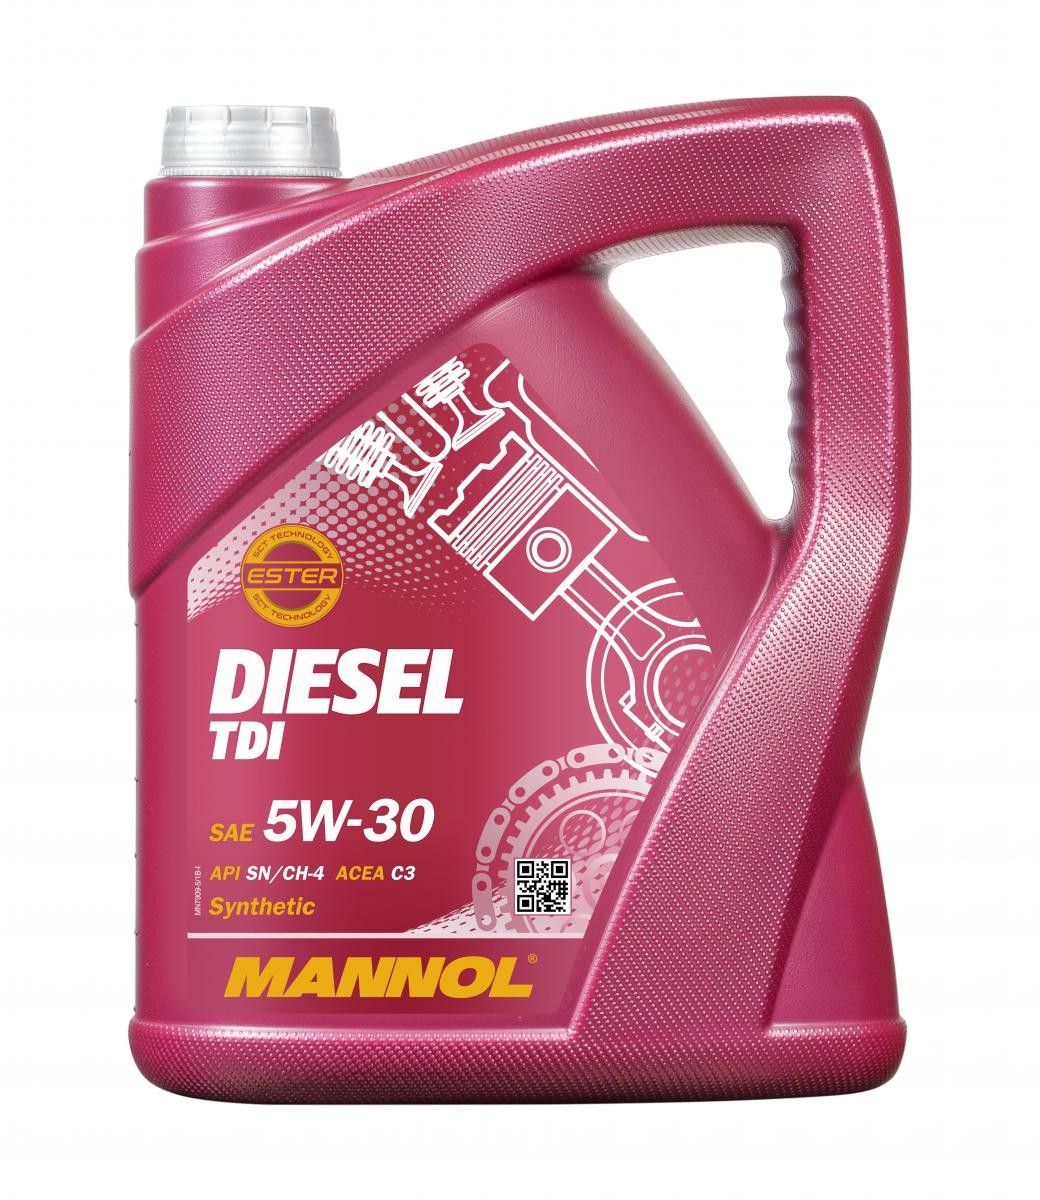 MANNOL DIESEL TDI 5W-30, 5l, Synthetic Oil Motor oil MN7909-5 buy